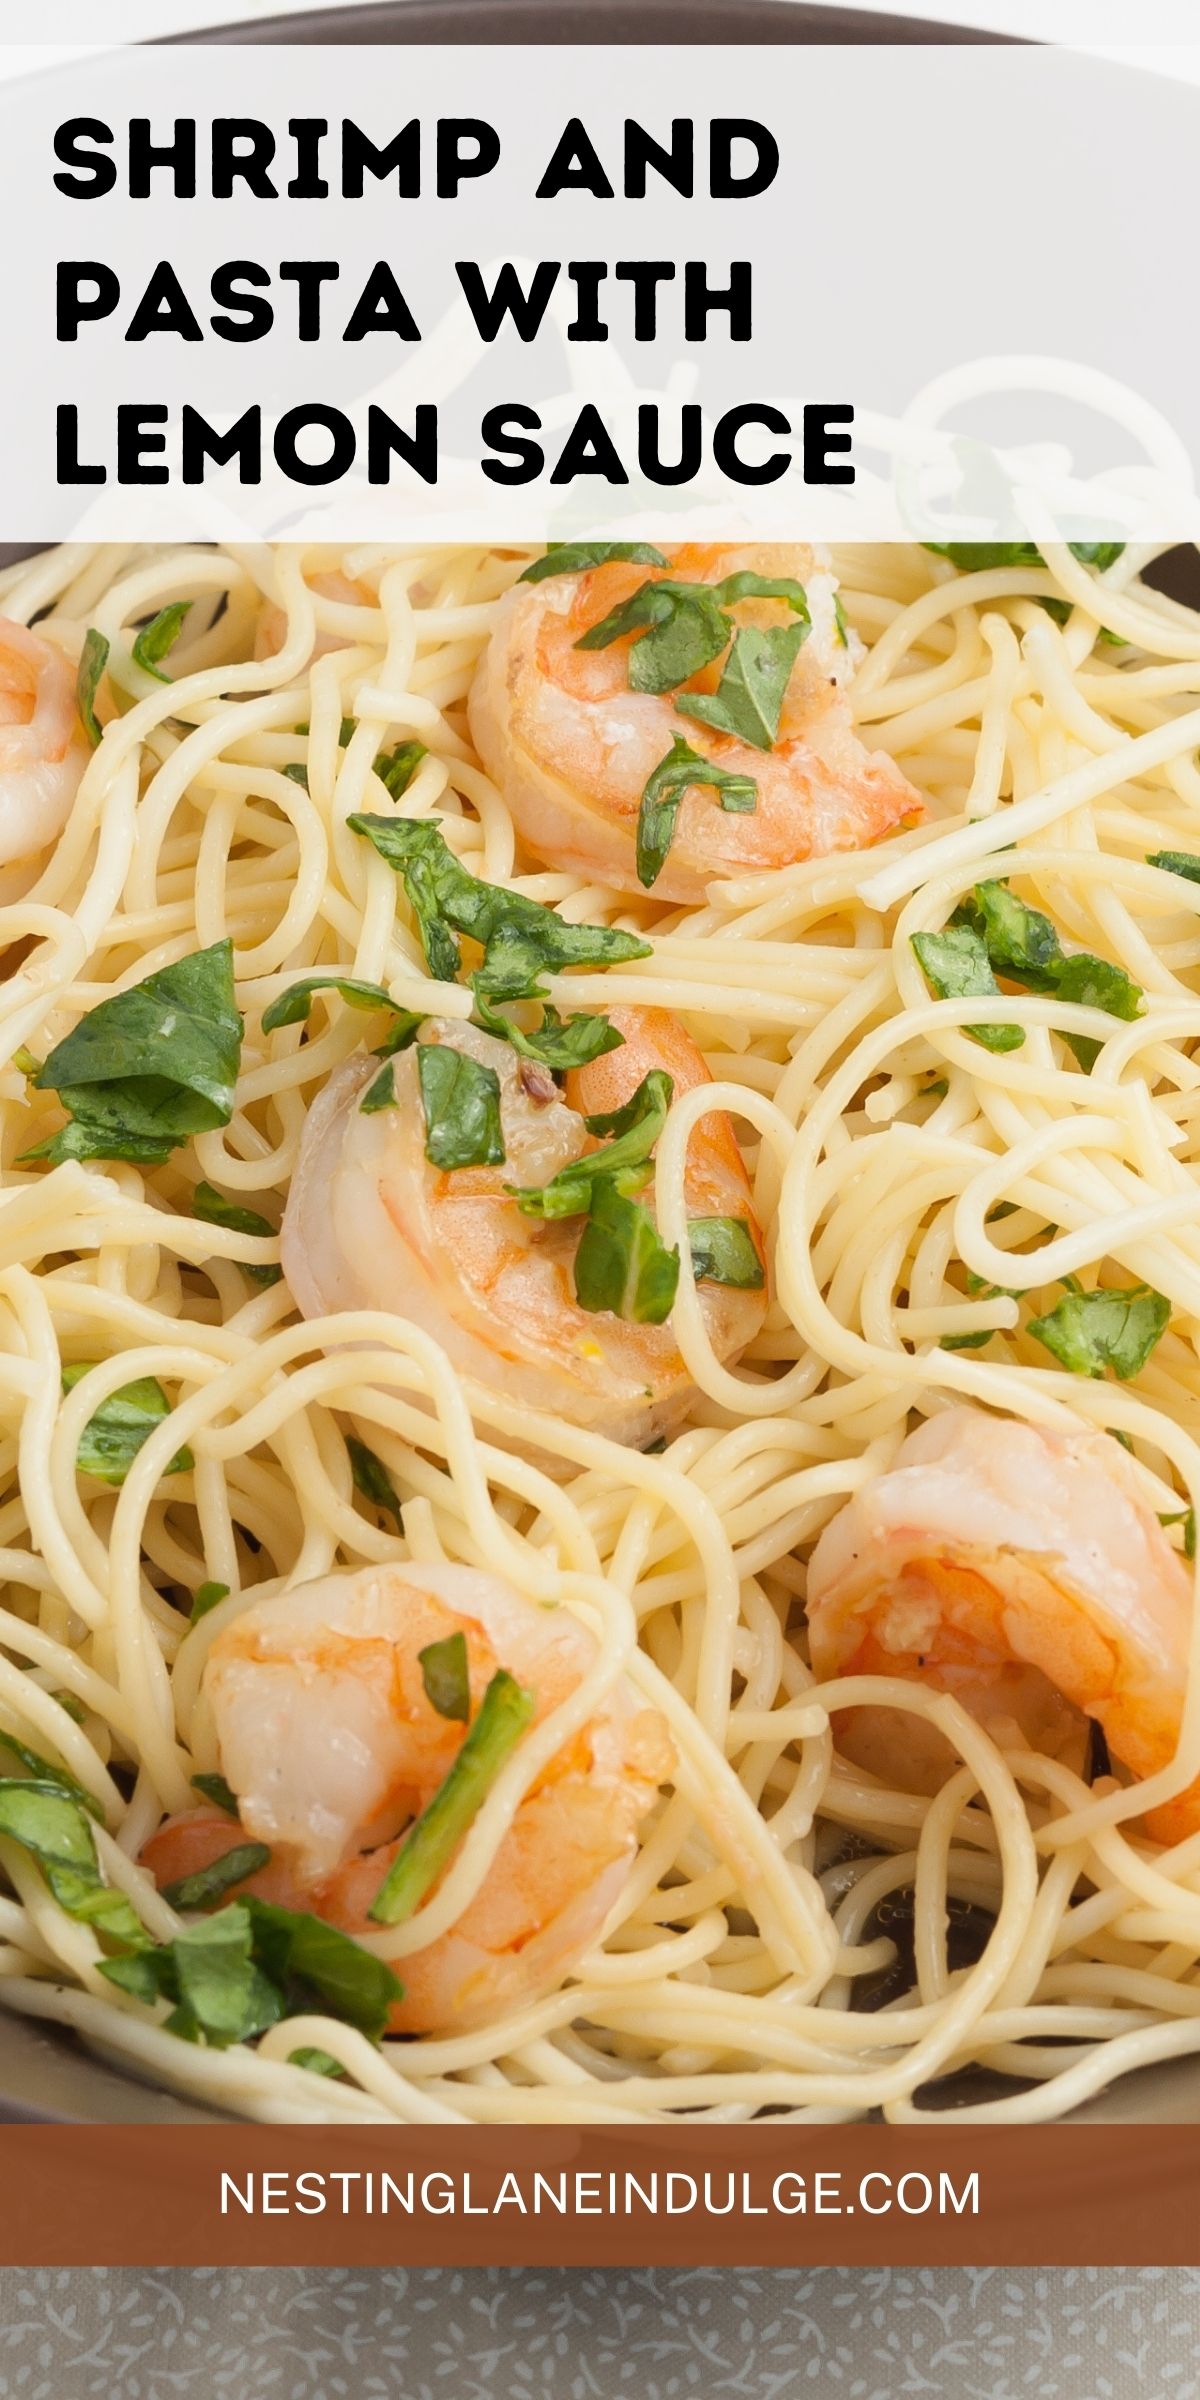 Shrimp and Pasta with Lemon Sauce Recipe Graphic.